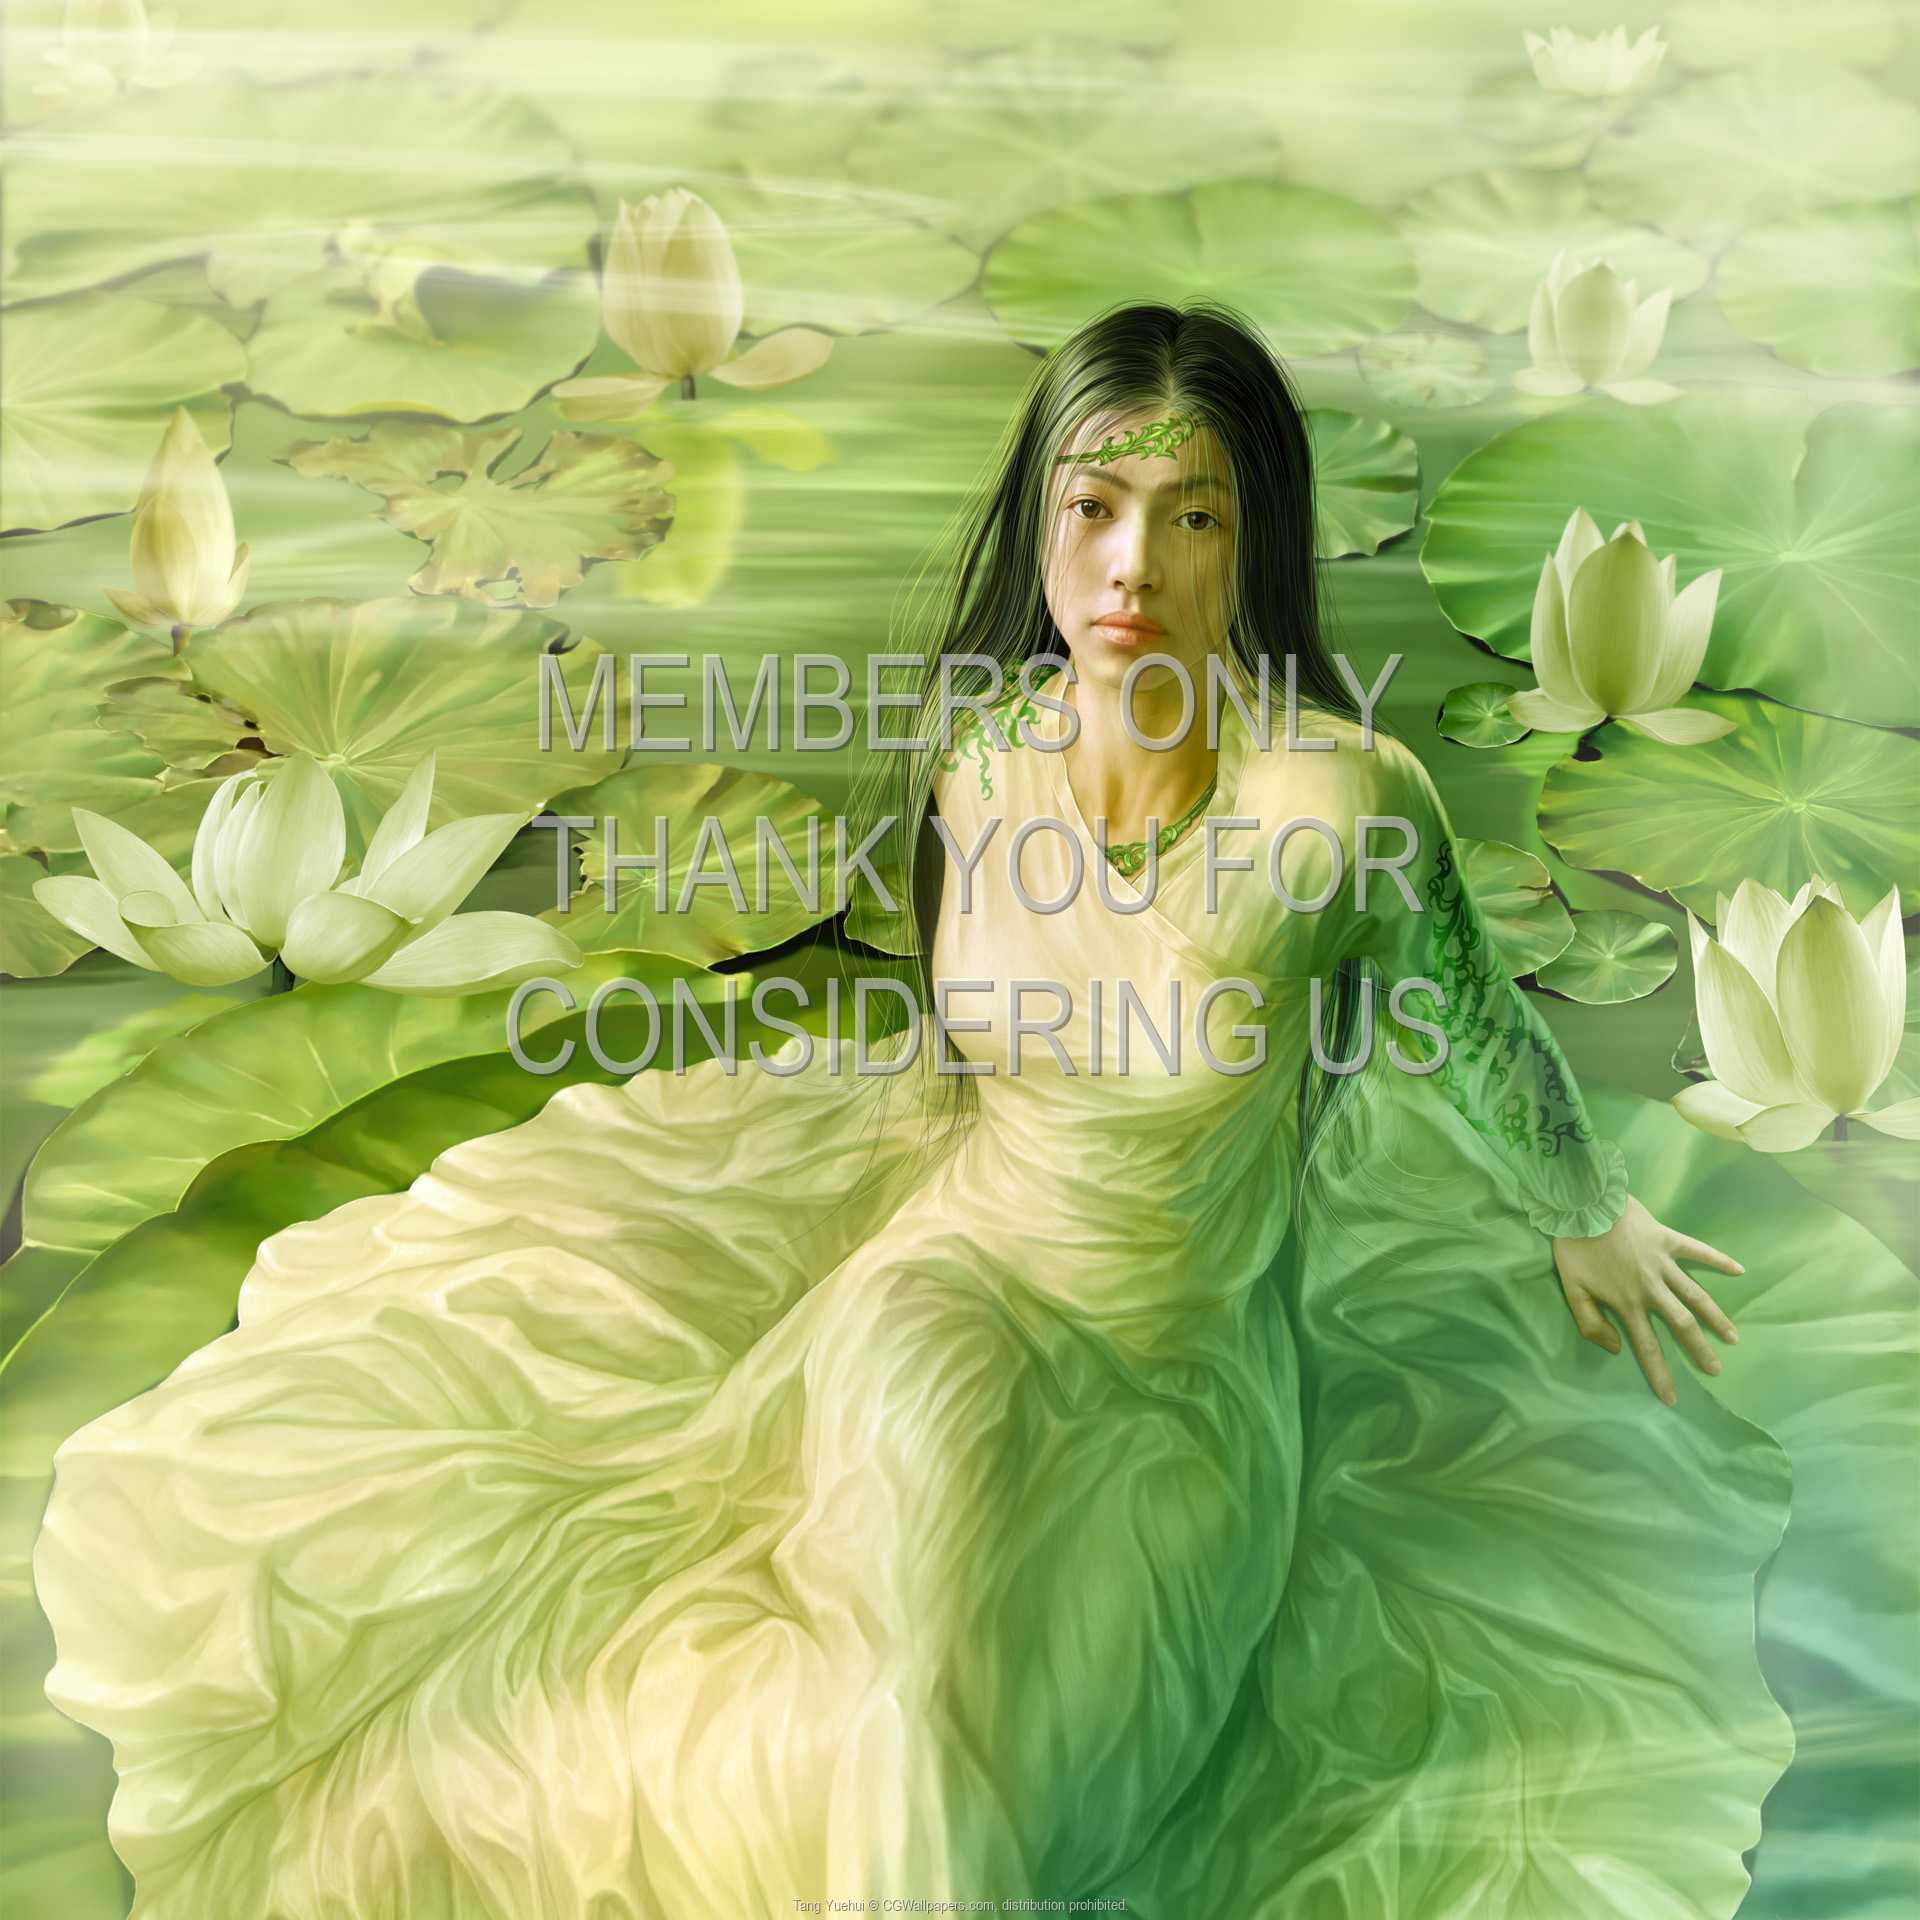 Tang Yuehui 1080p%20Horizontal Mobile wallpaper or background 28